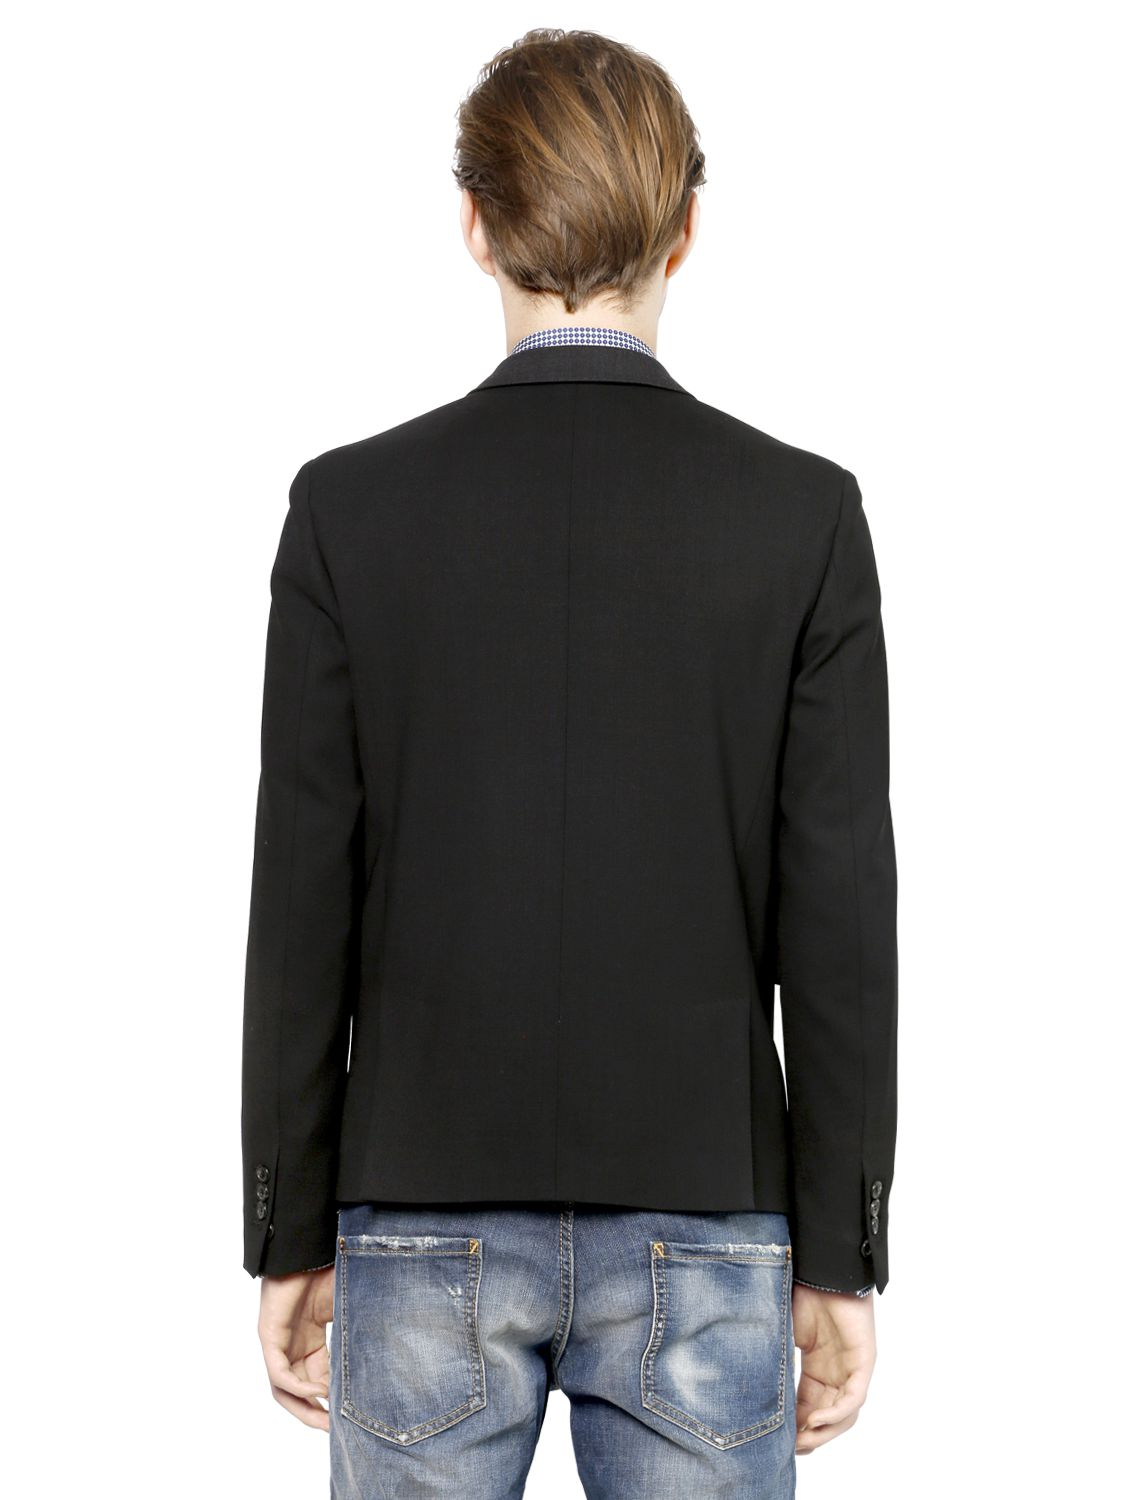 DSquared² Two Tone Cool Wool School Boy Jacket in Black for Men - Lyst